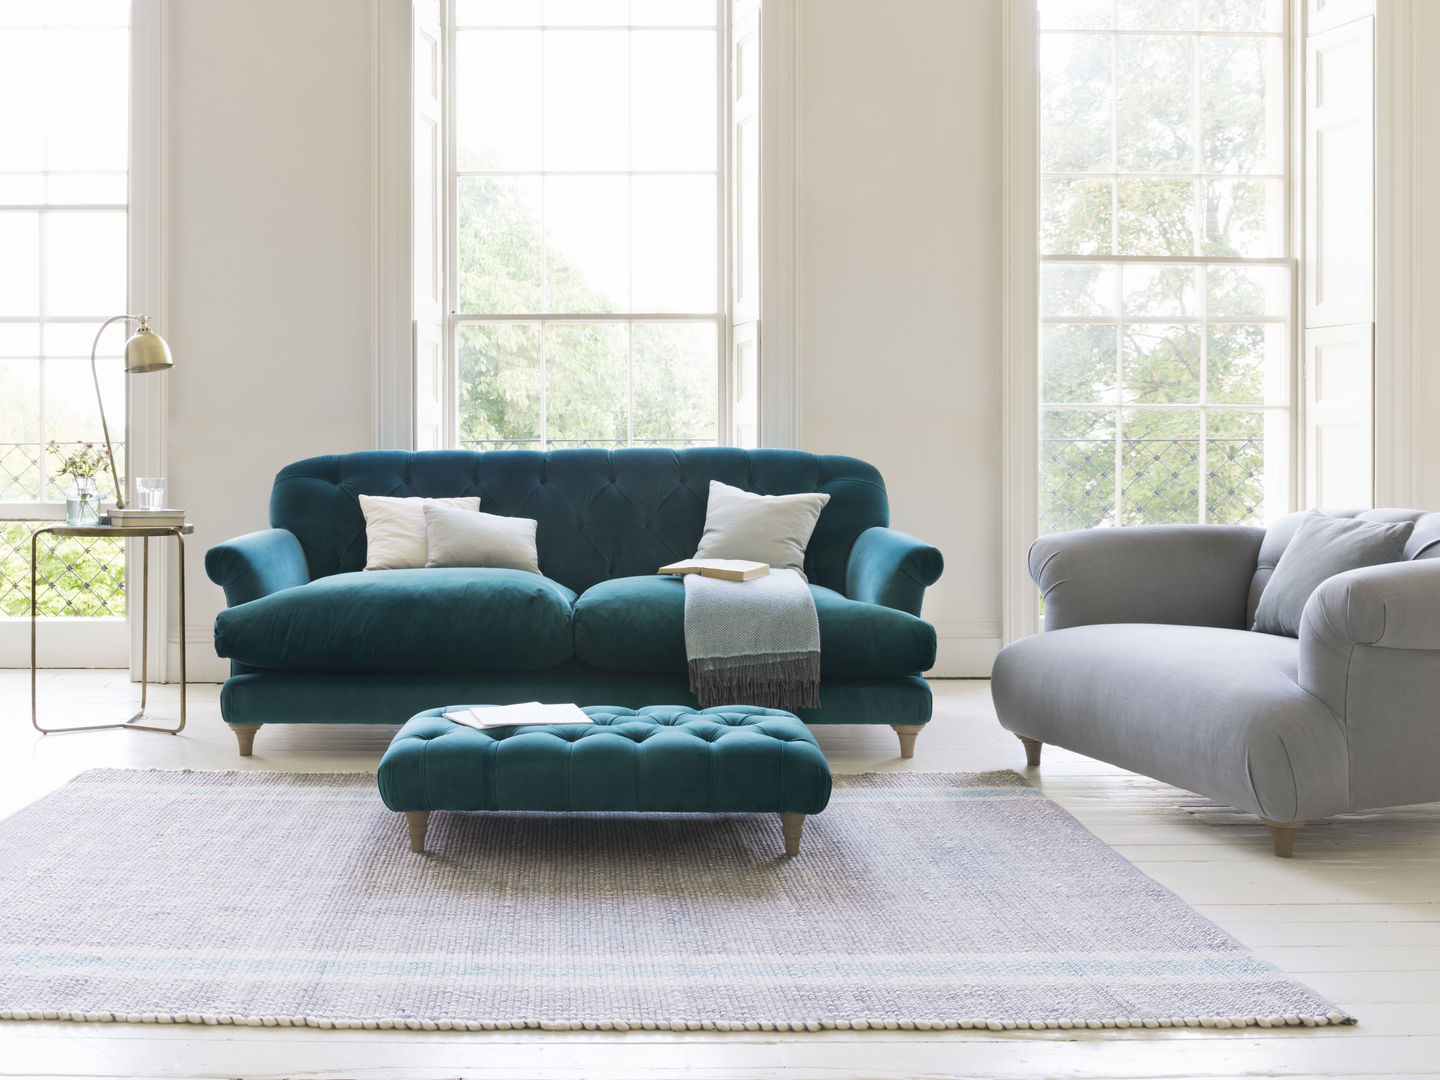 Comfty footstool Loaf Nowoczesny salon footstool,teal,living room,sofa,space,windows,blue,velvet,green